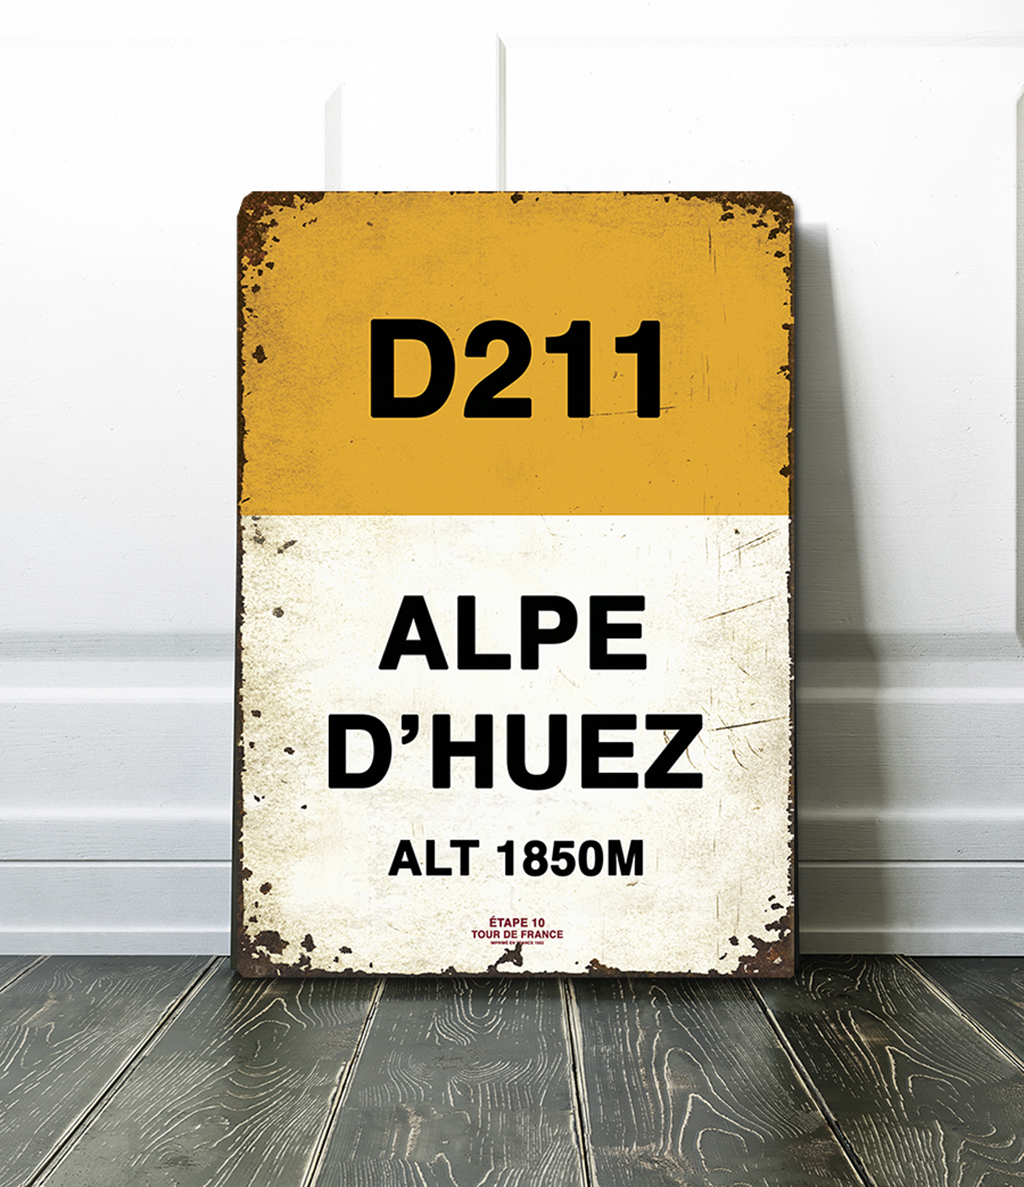 alpe dhuez road sign